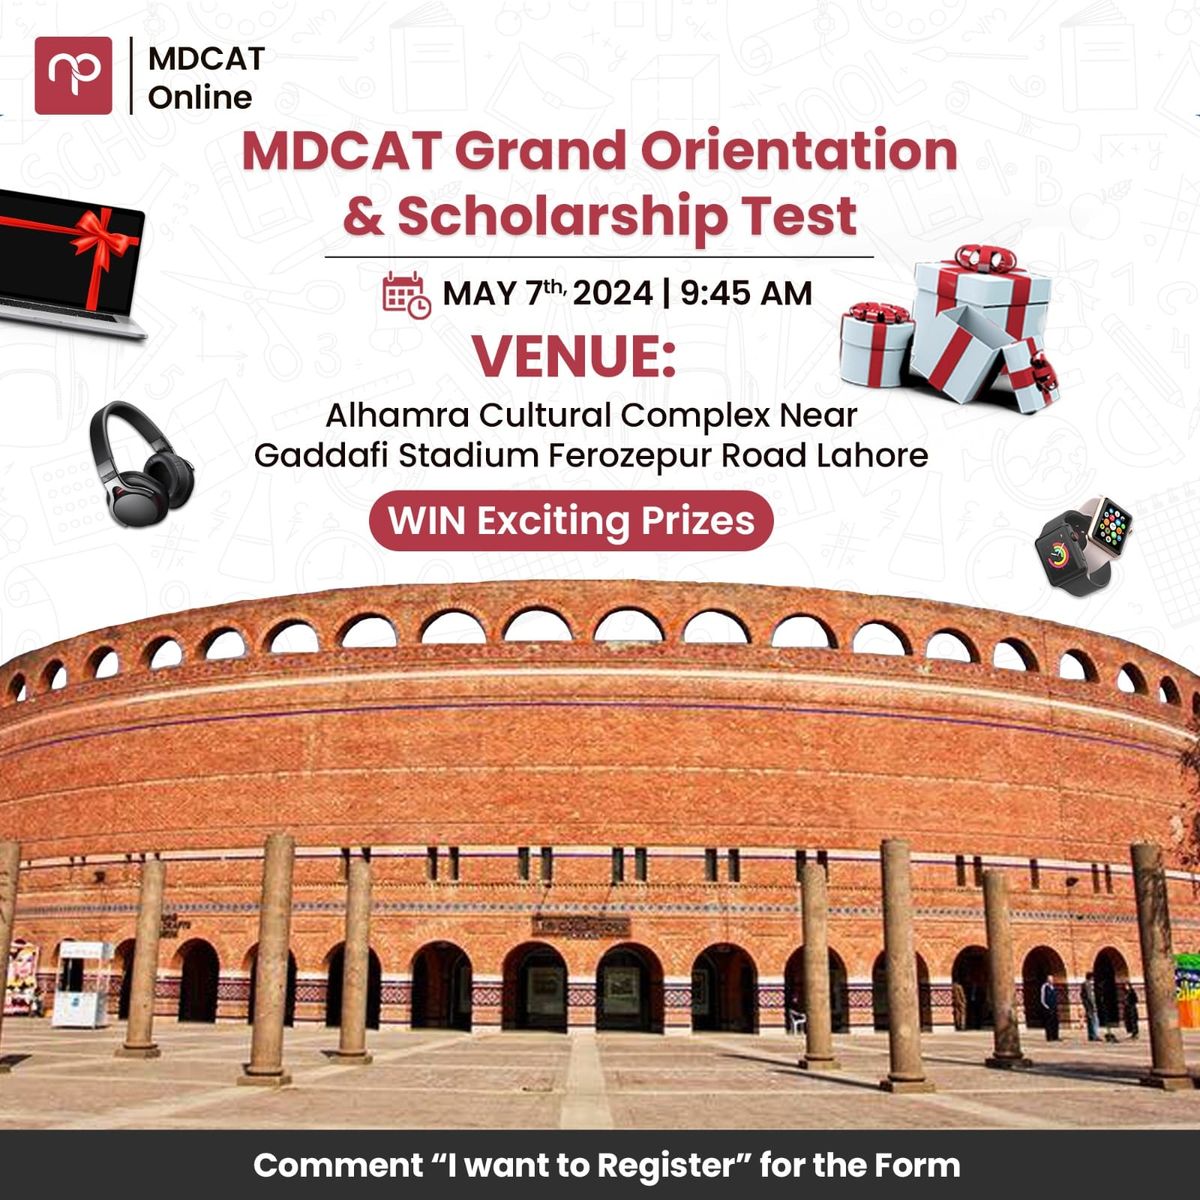 FREE MDCAT Grand Orientation & Scholarship Test